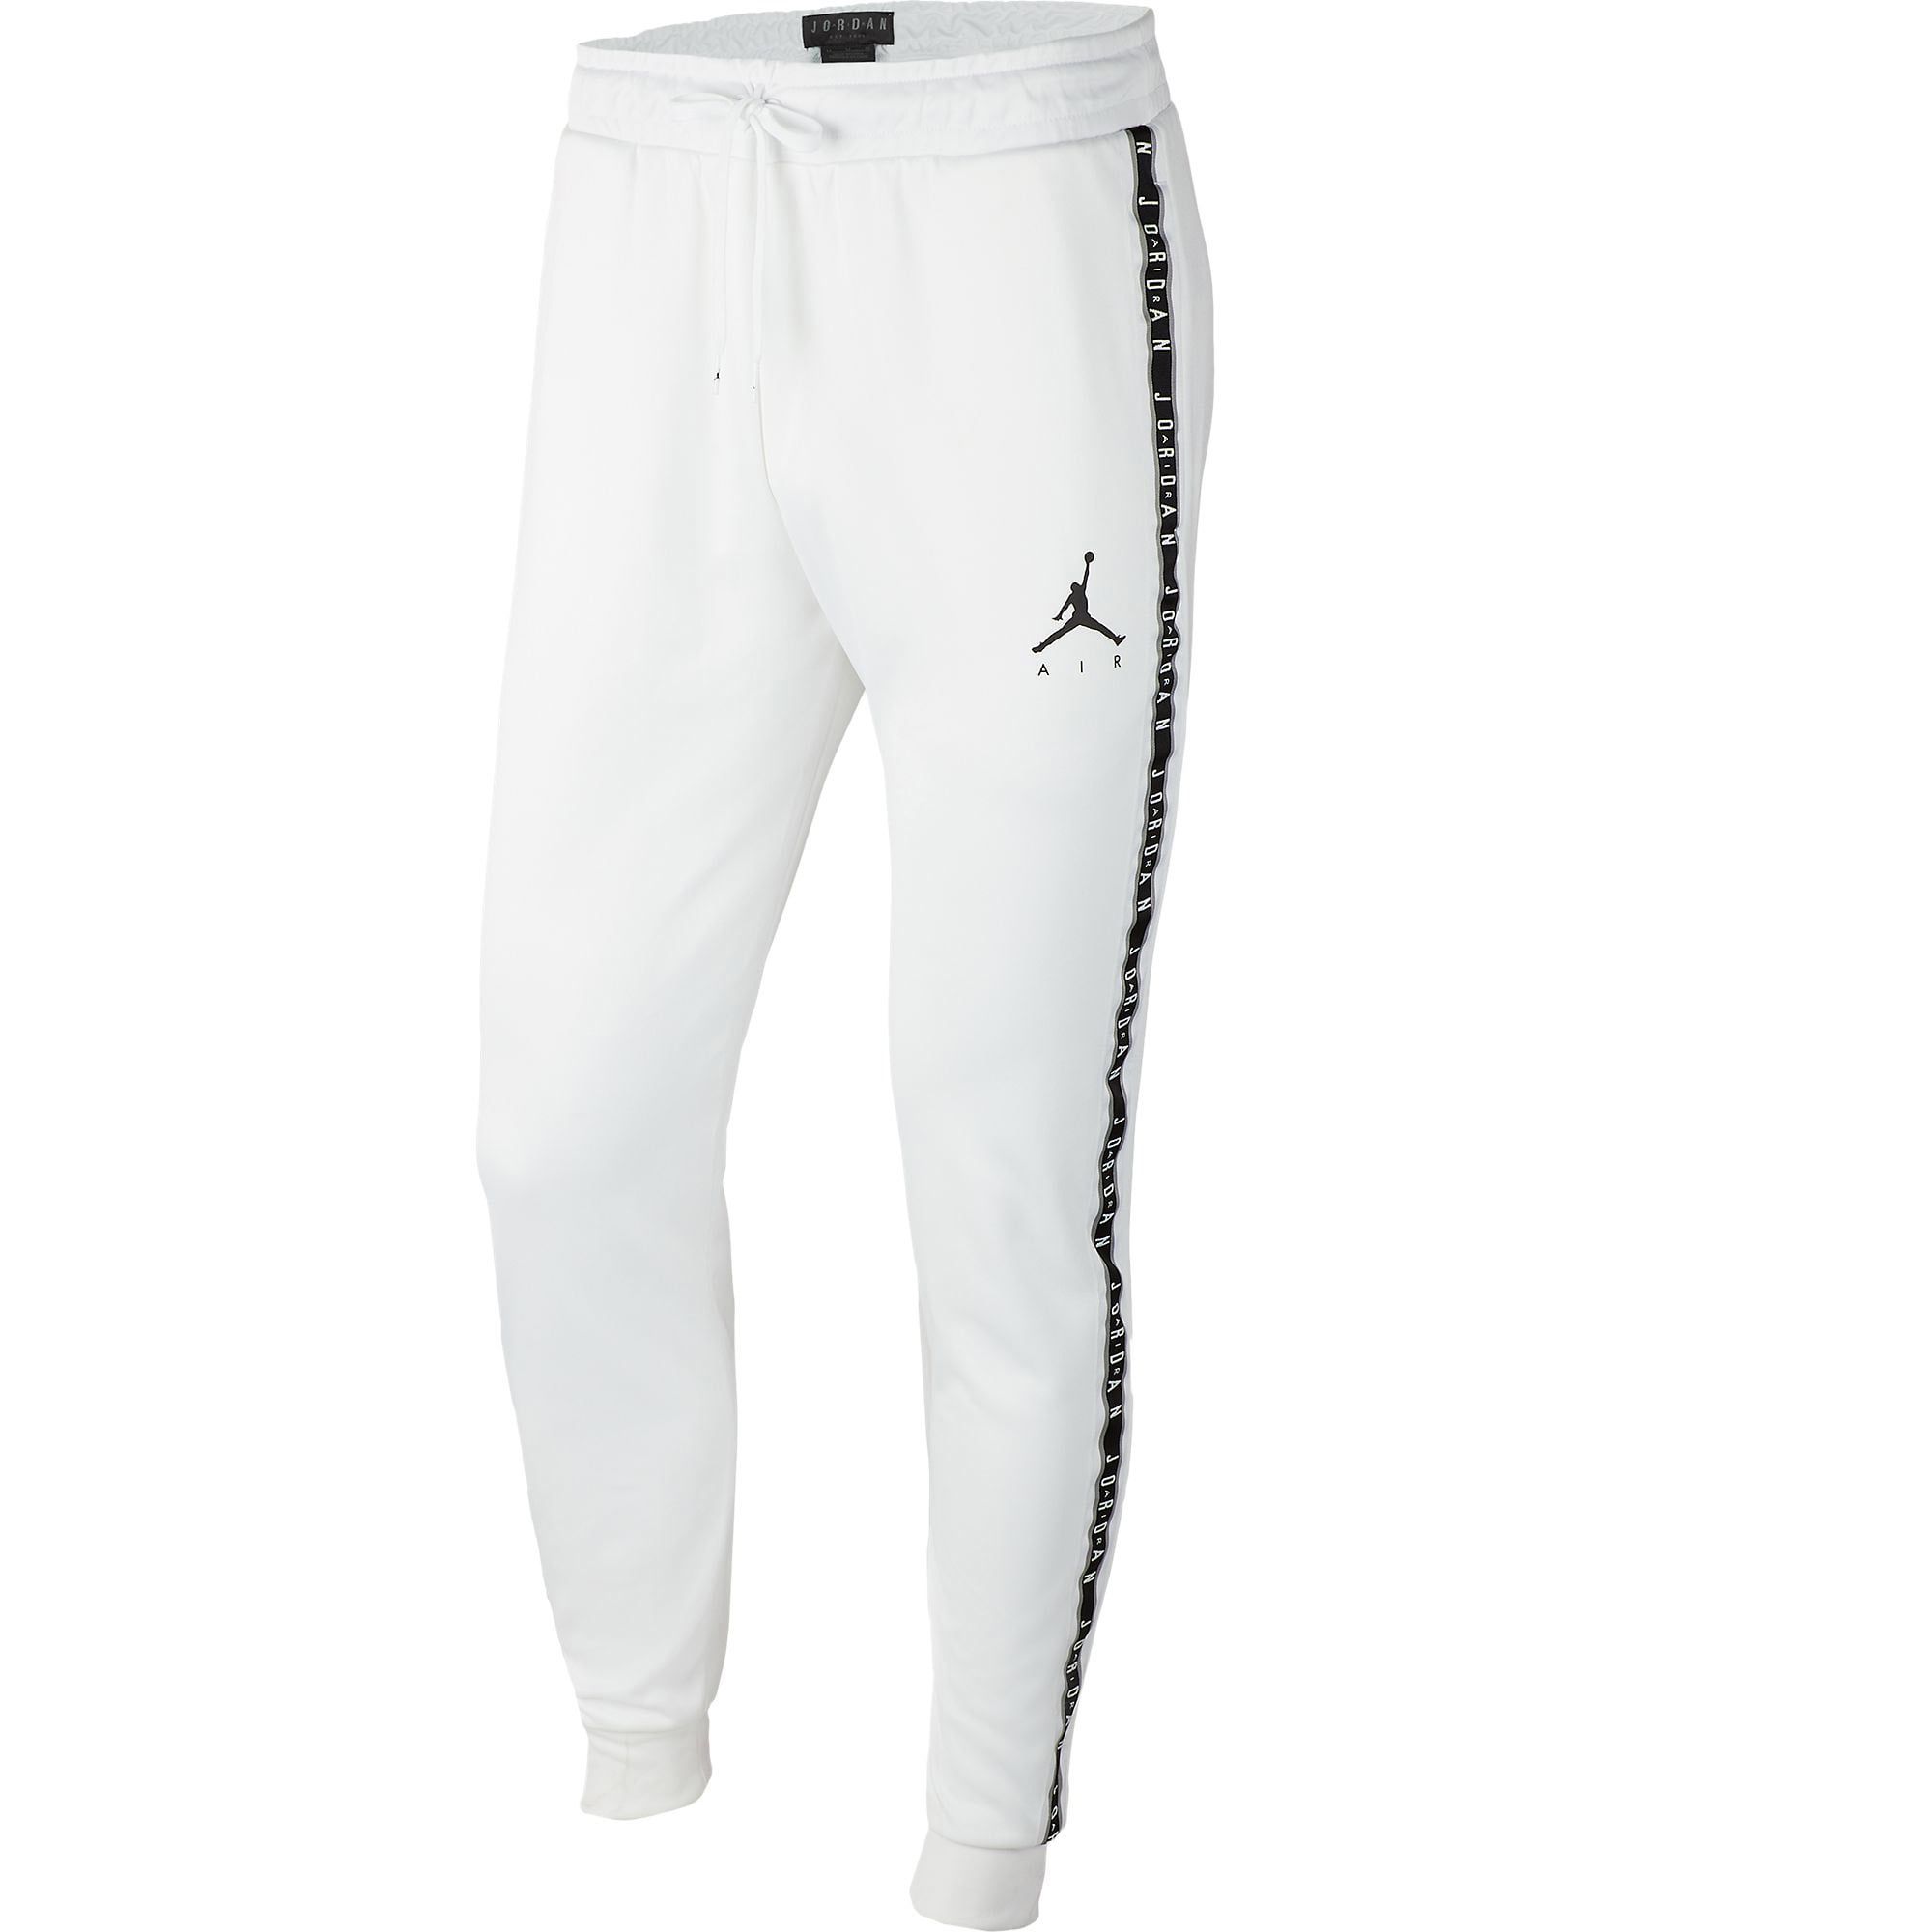 Jordan Sportswear Jumpman Men's Pants White aq2696-100 - Walmart.com